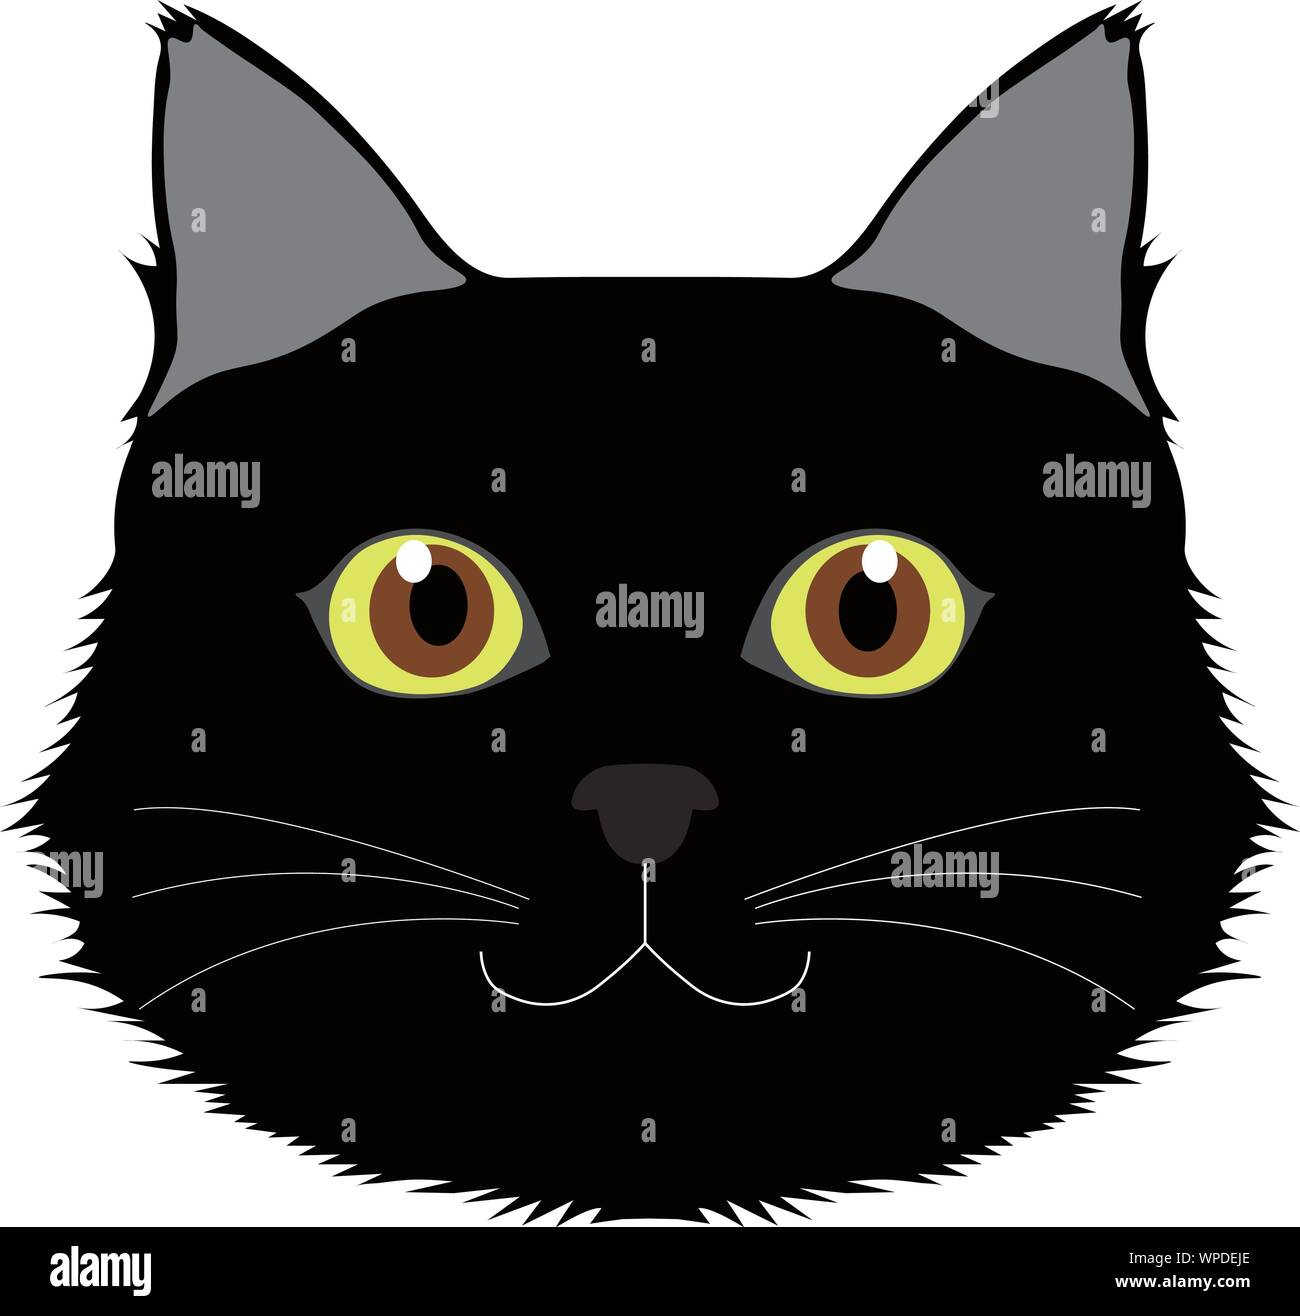 Black cat Stock Vector Images - Alamy